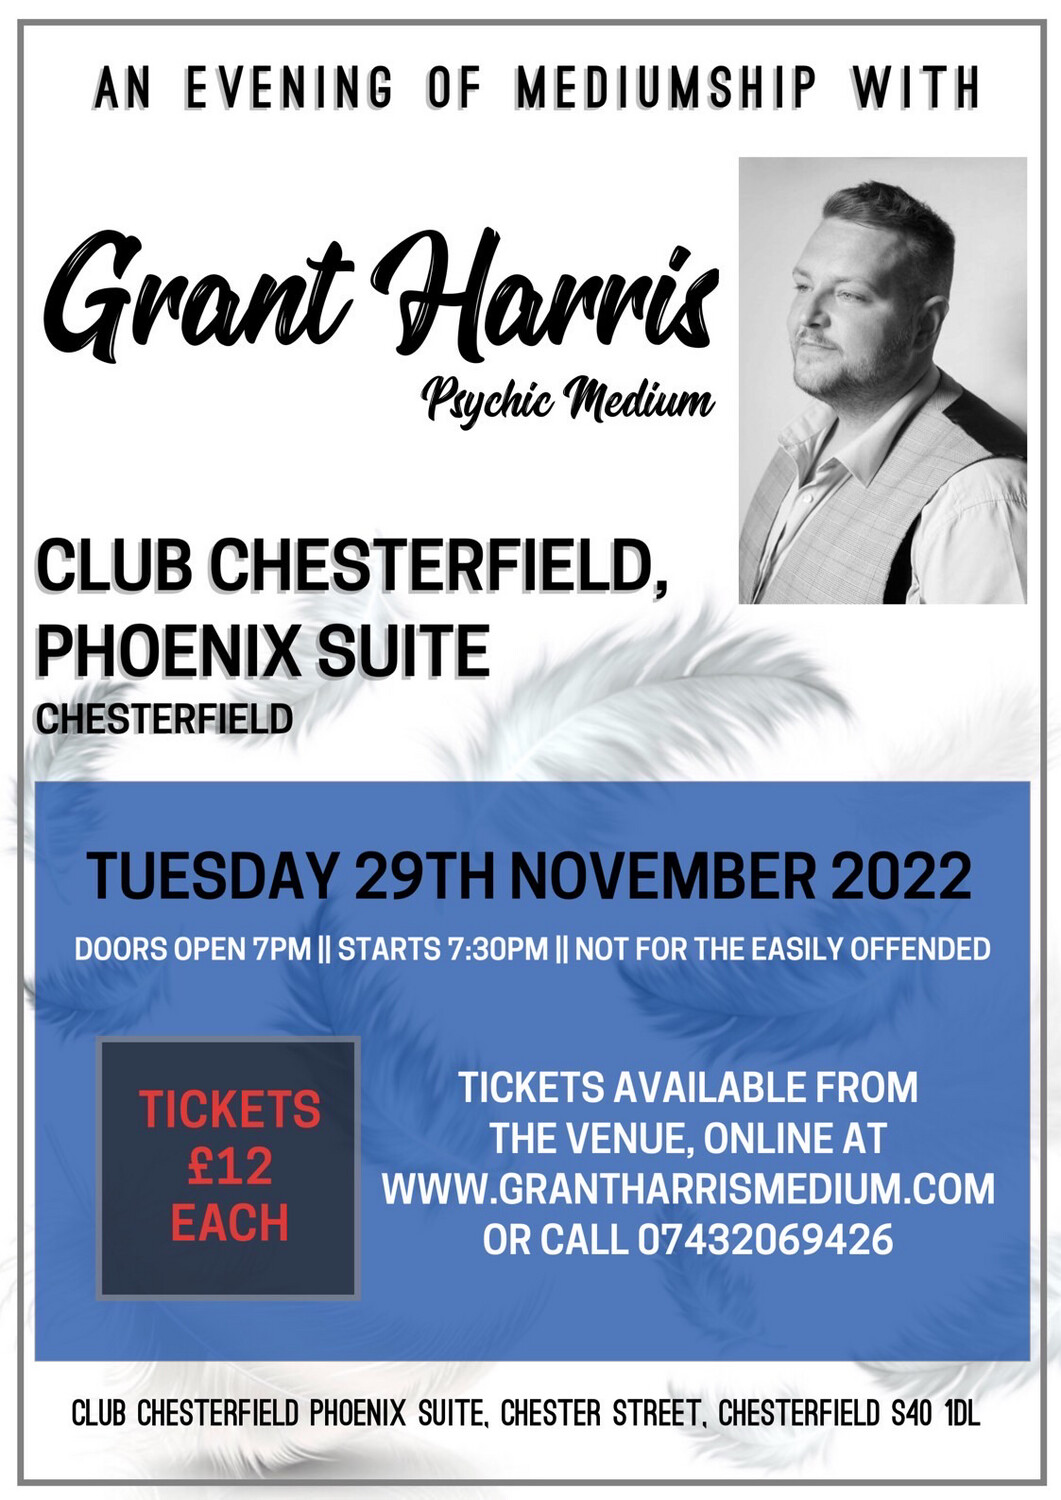 Club Chesterfield, Tue 29th November 2022